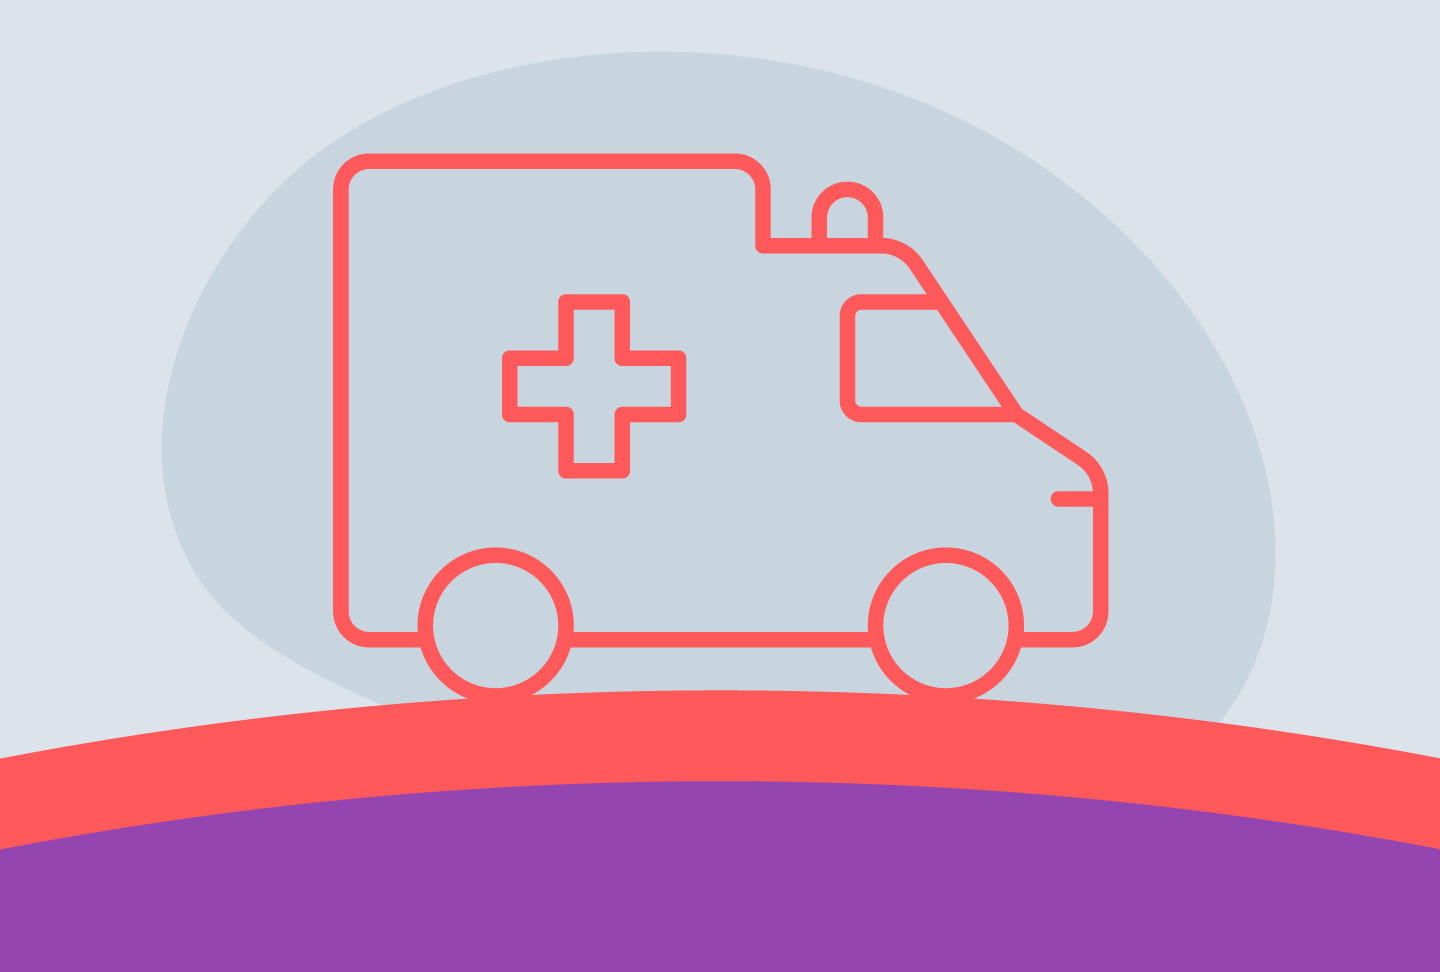 Illustration of ambulance